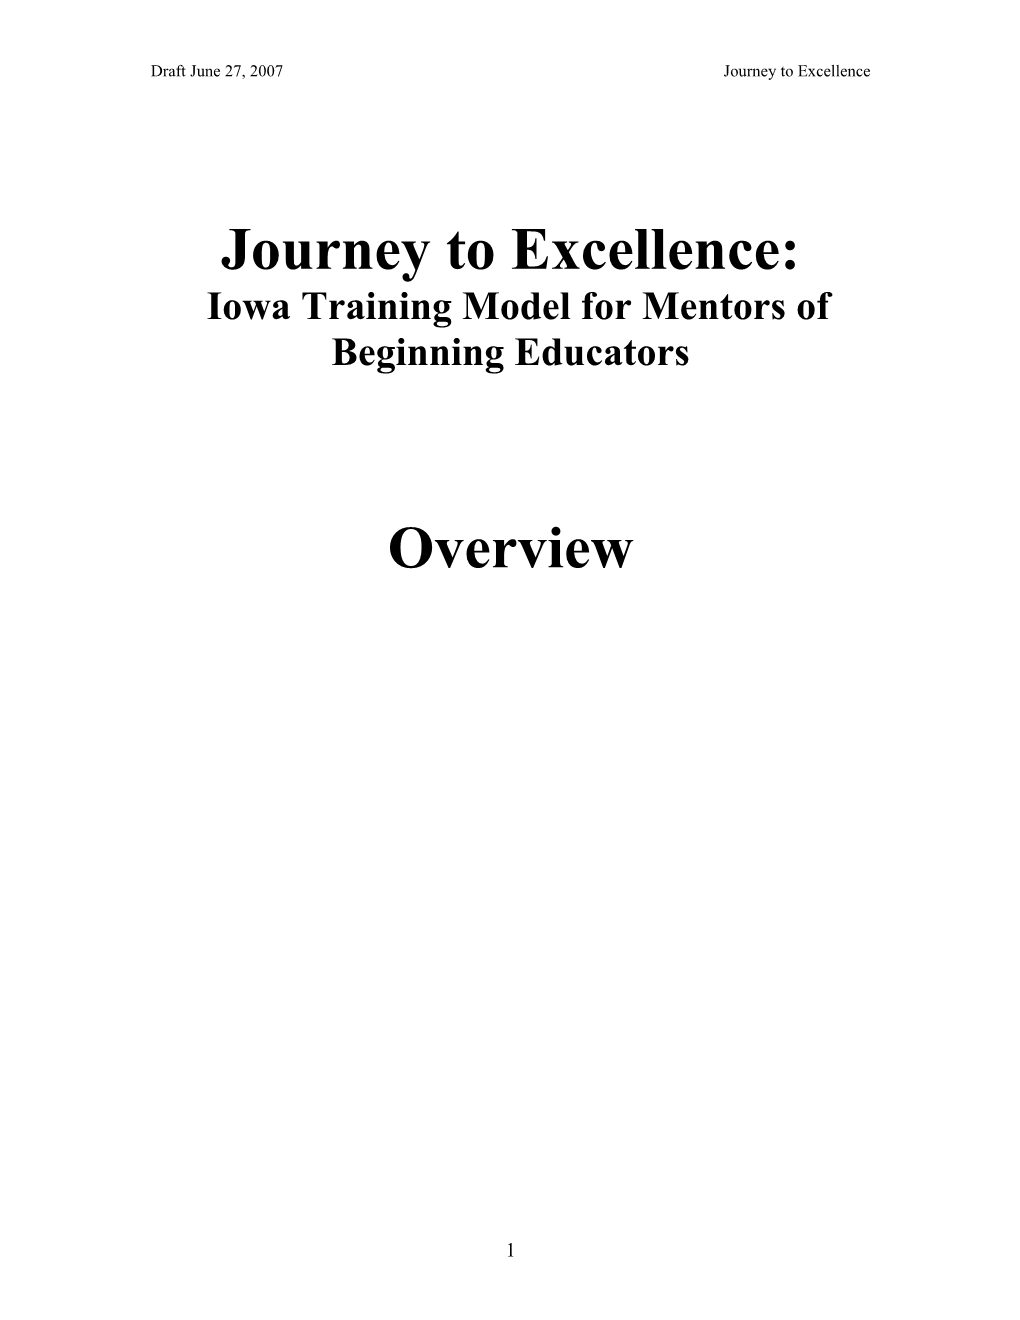 Iowa Training Model for Mentors of Beginning Educators